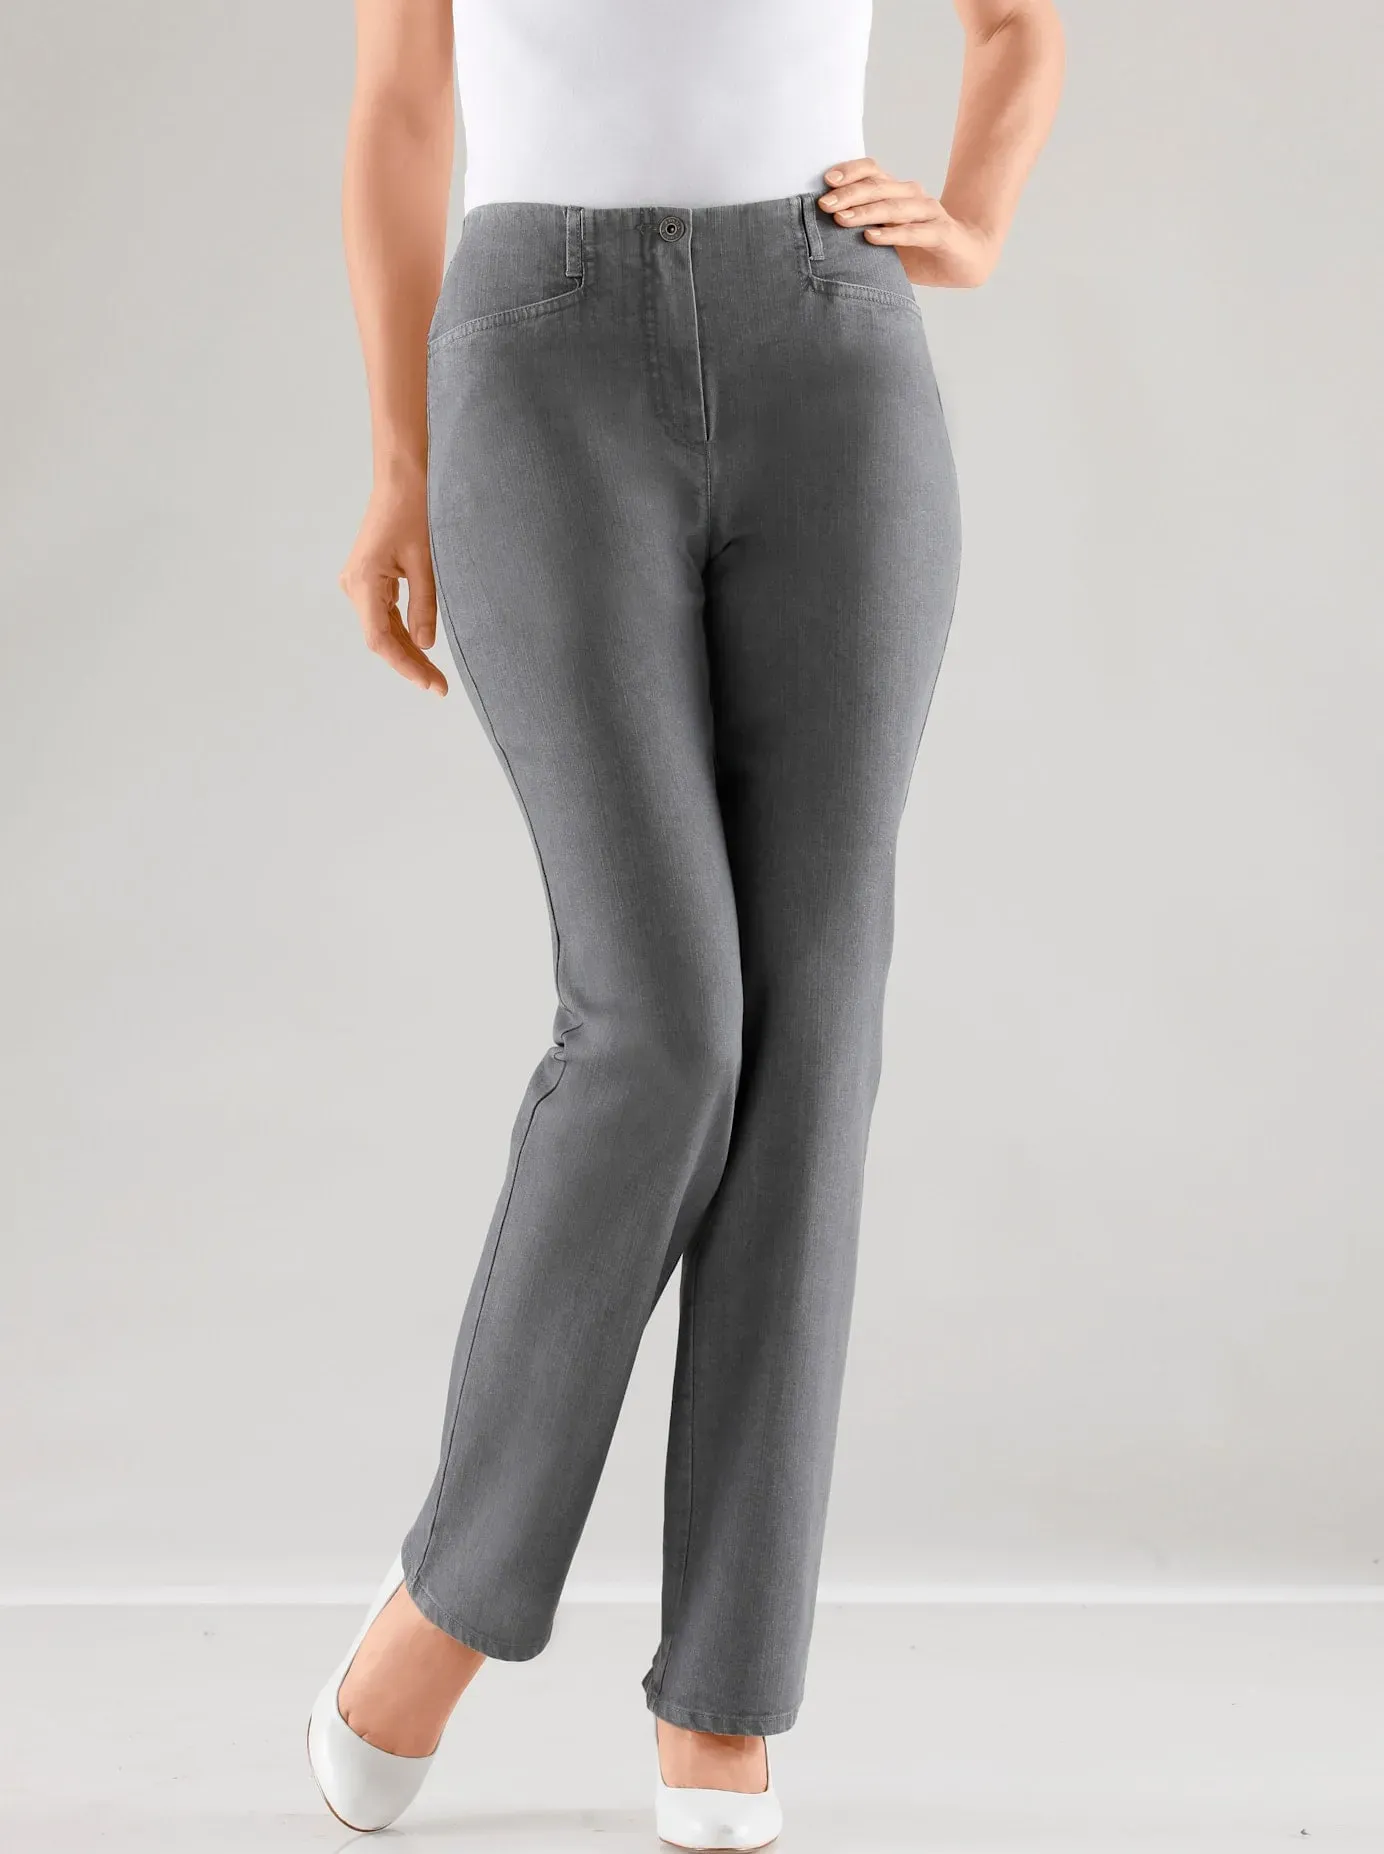 Dehnbund-Jeans COSMA Gr. 25, Kurzgrößen, grau Damen Jeans